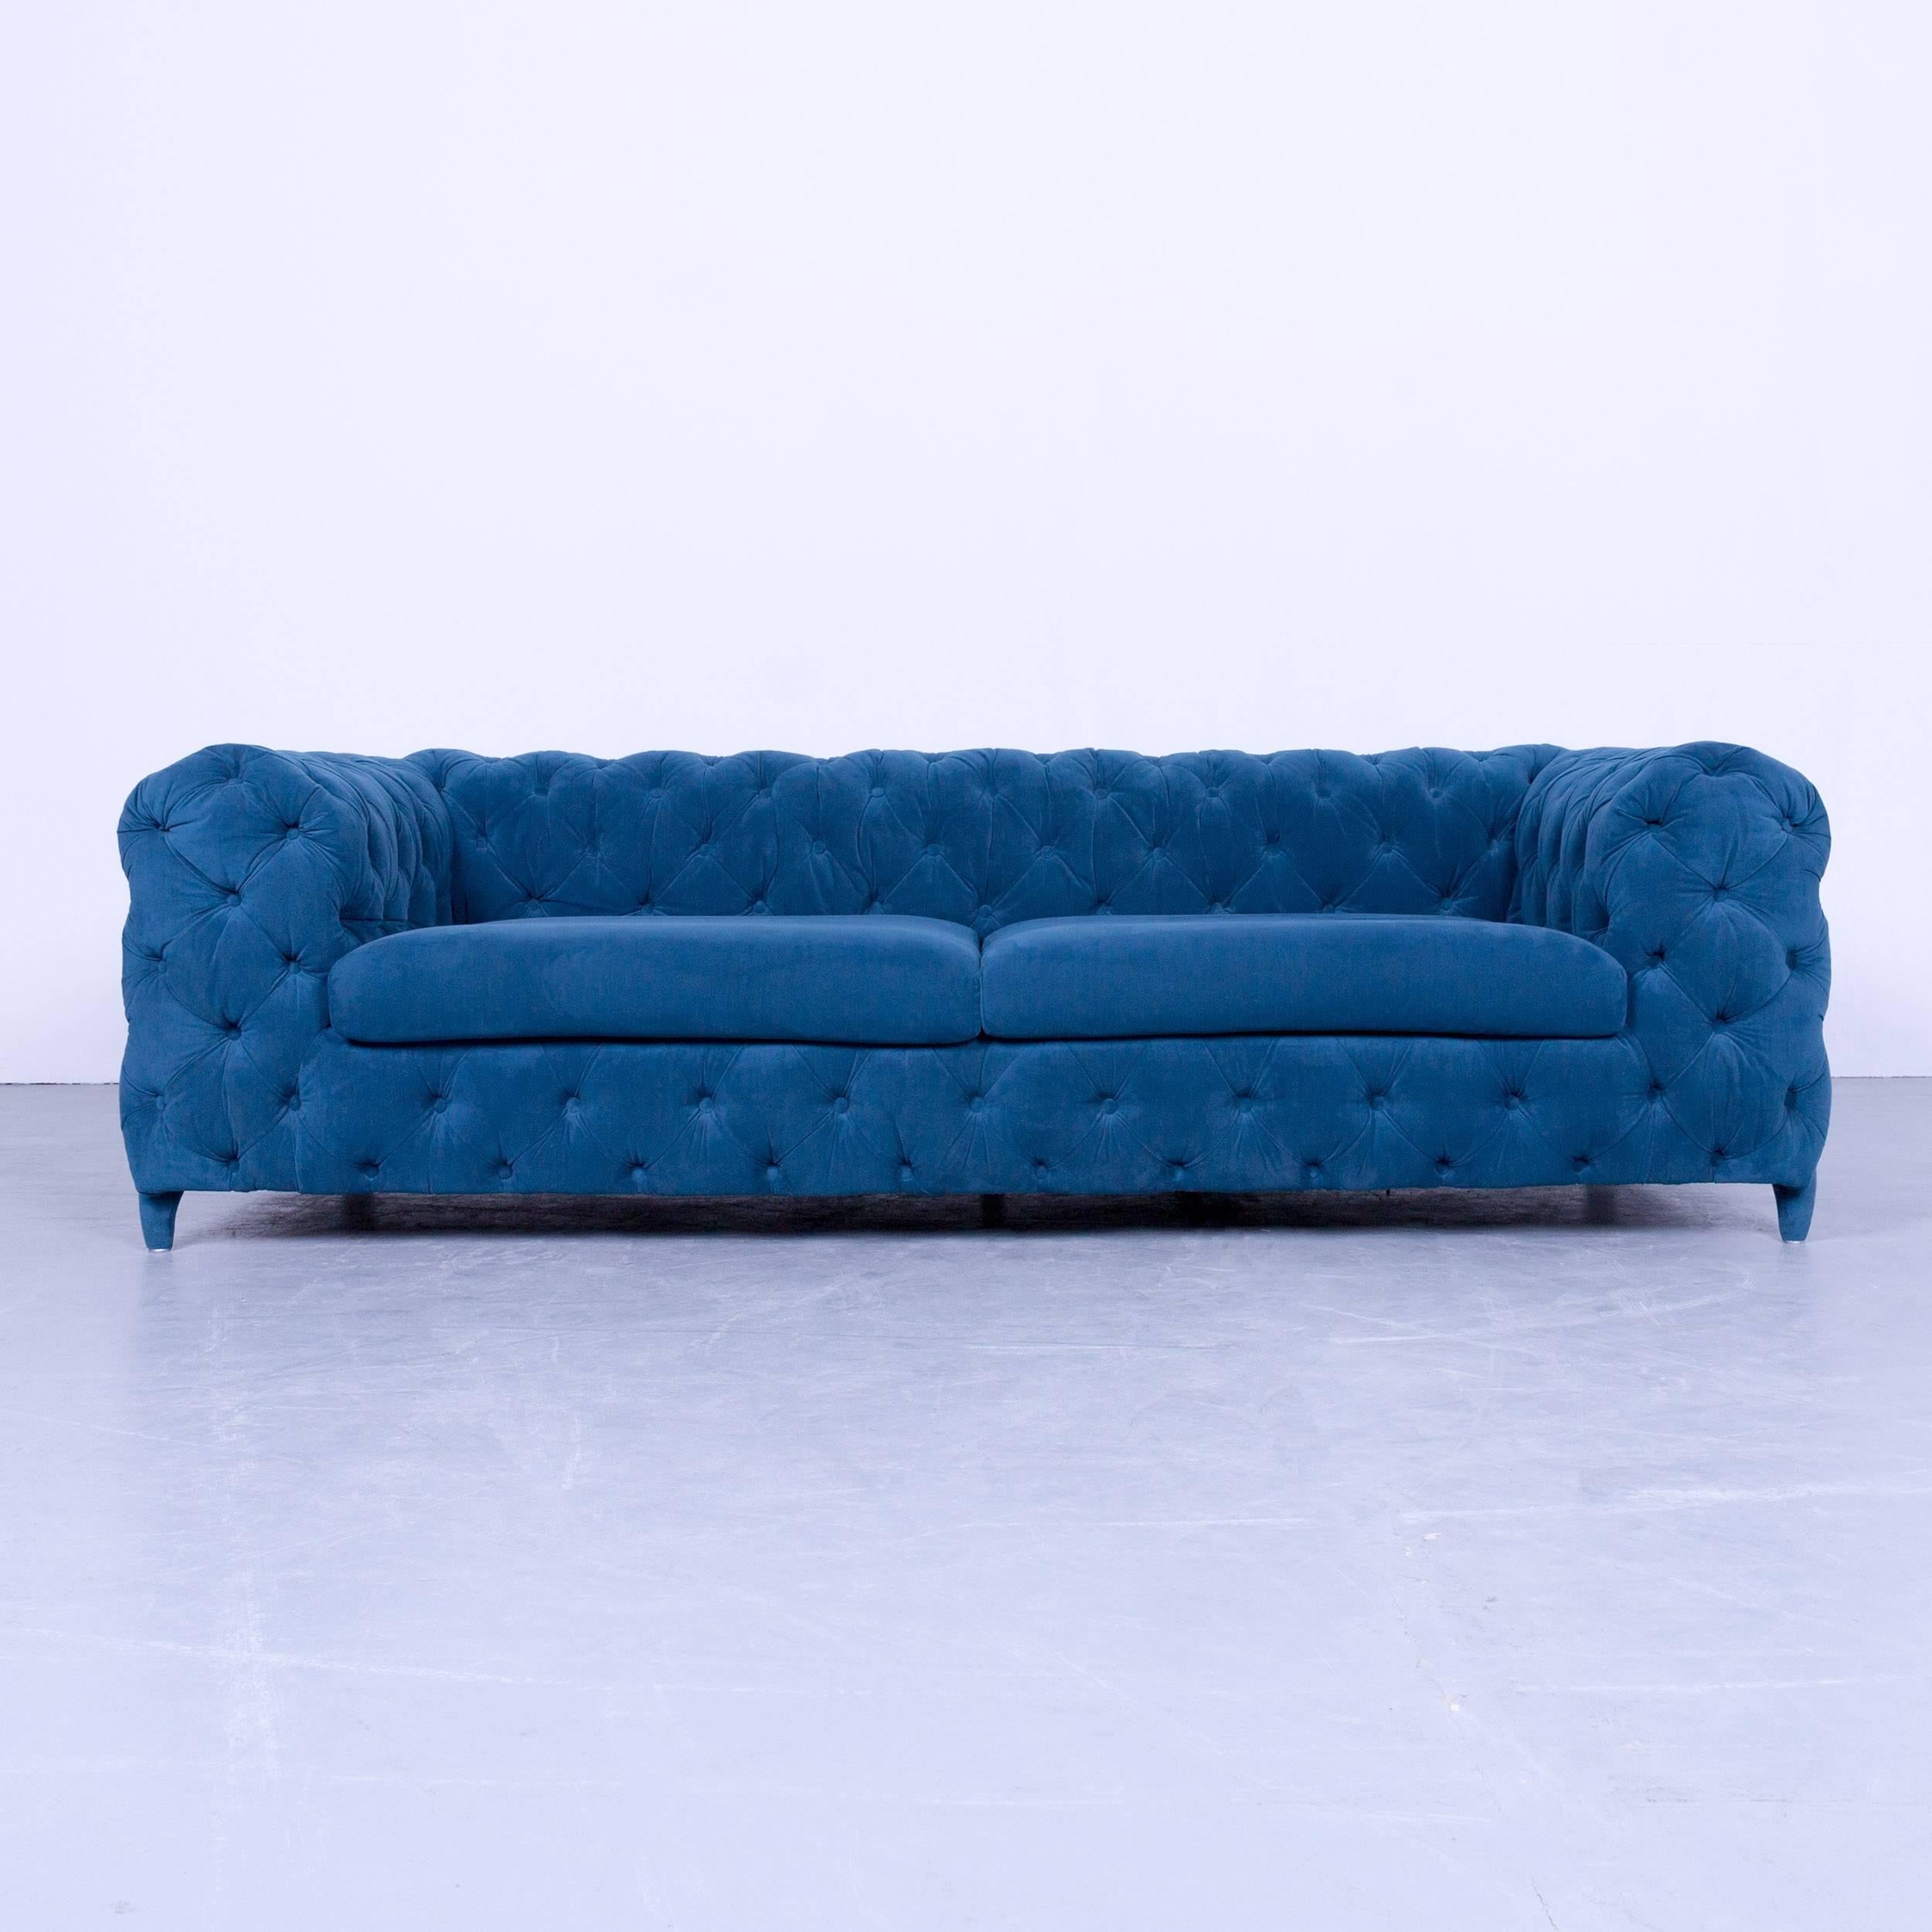 Original Kare designer sofa set fabric green and blue three-seat couch modern.